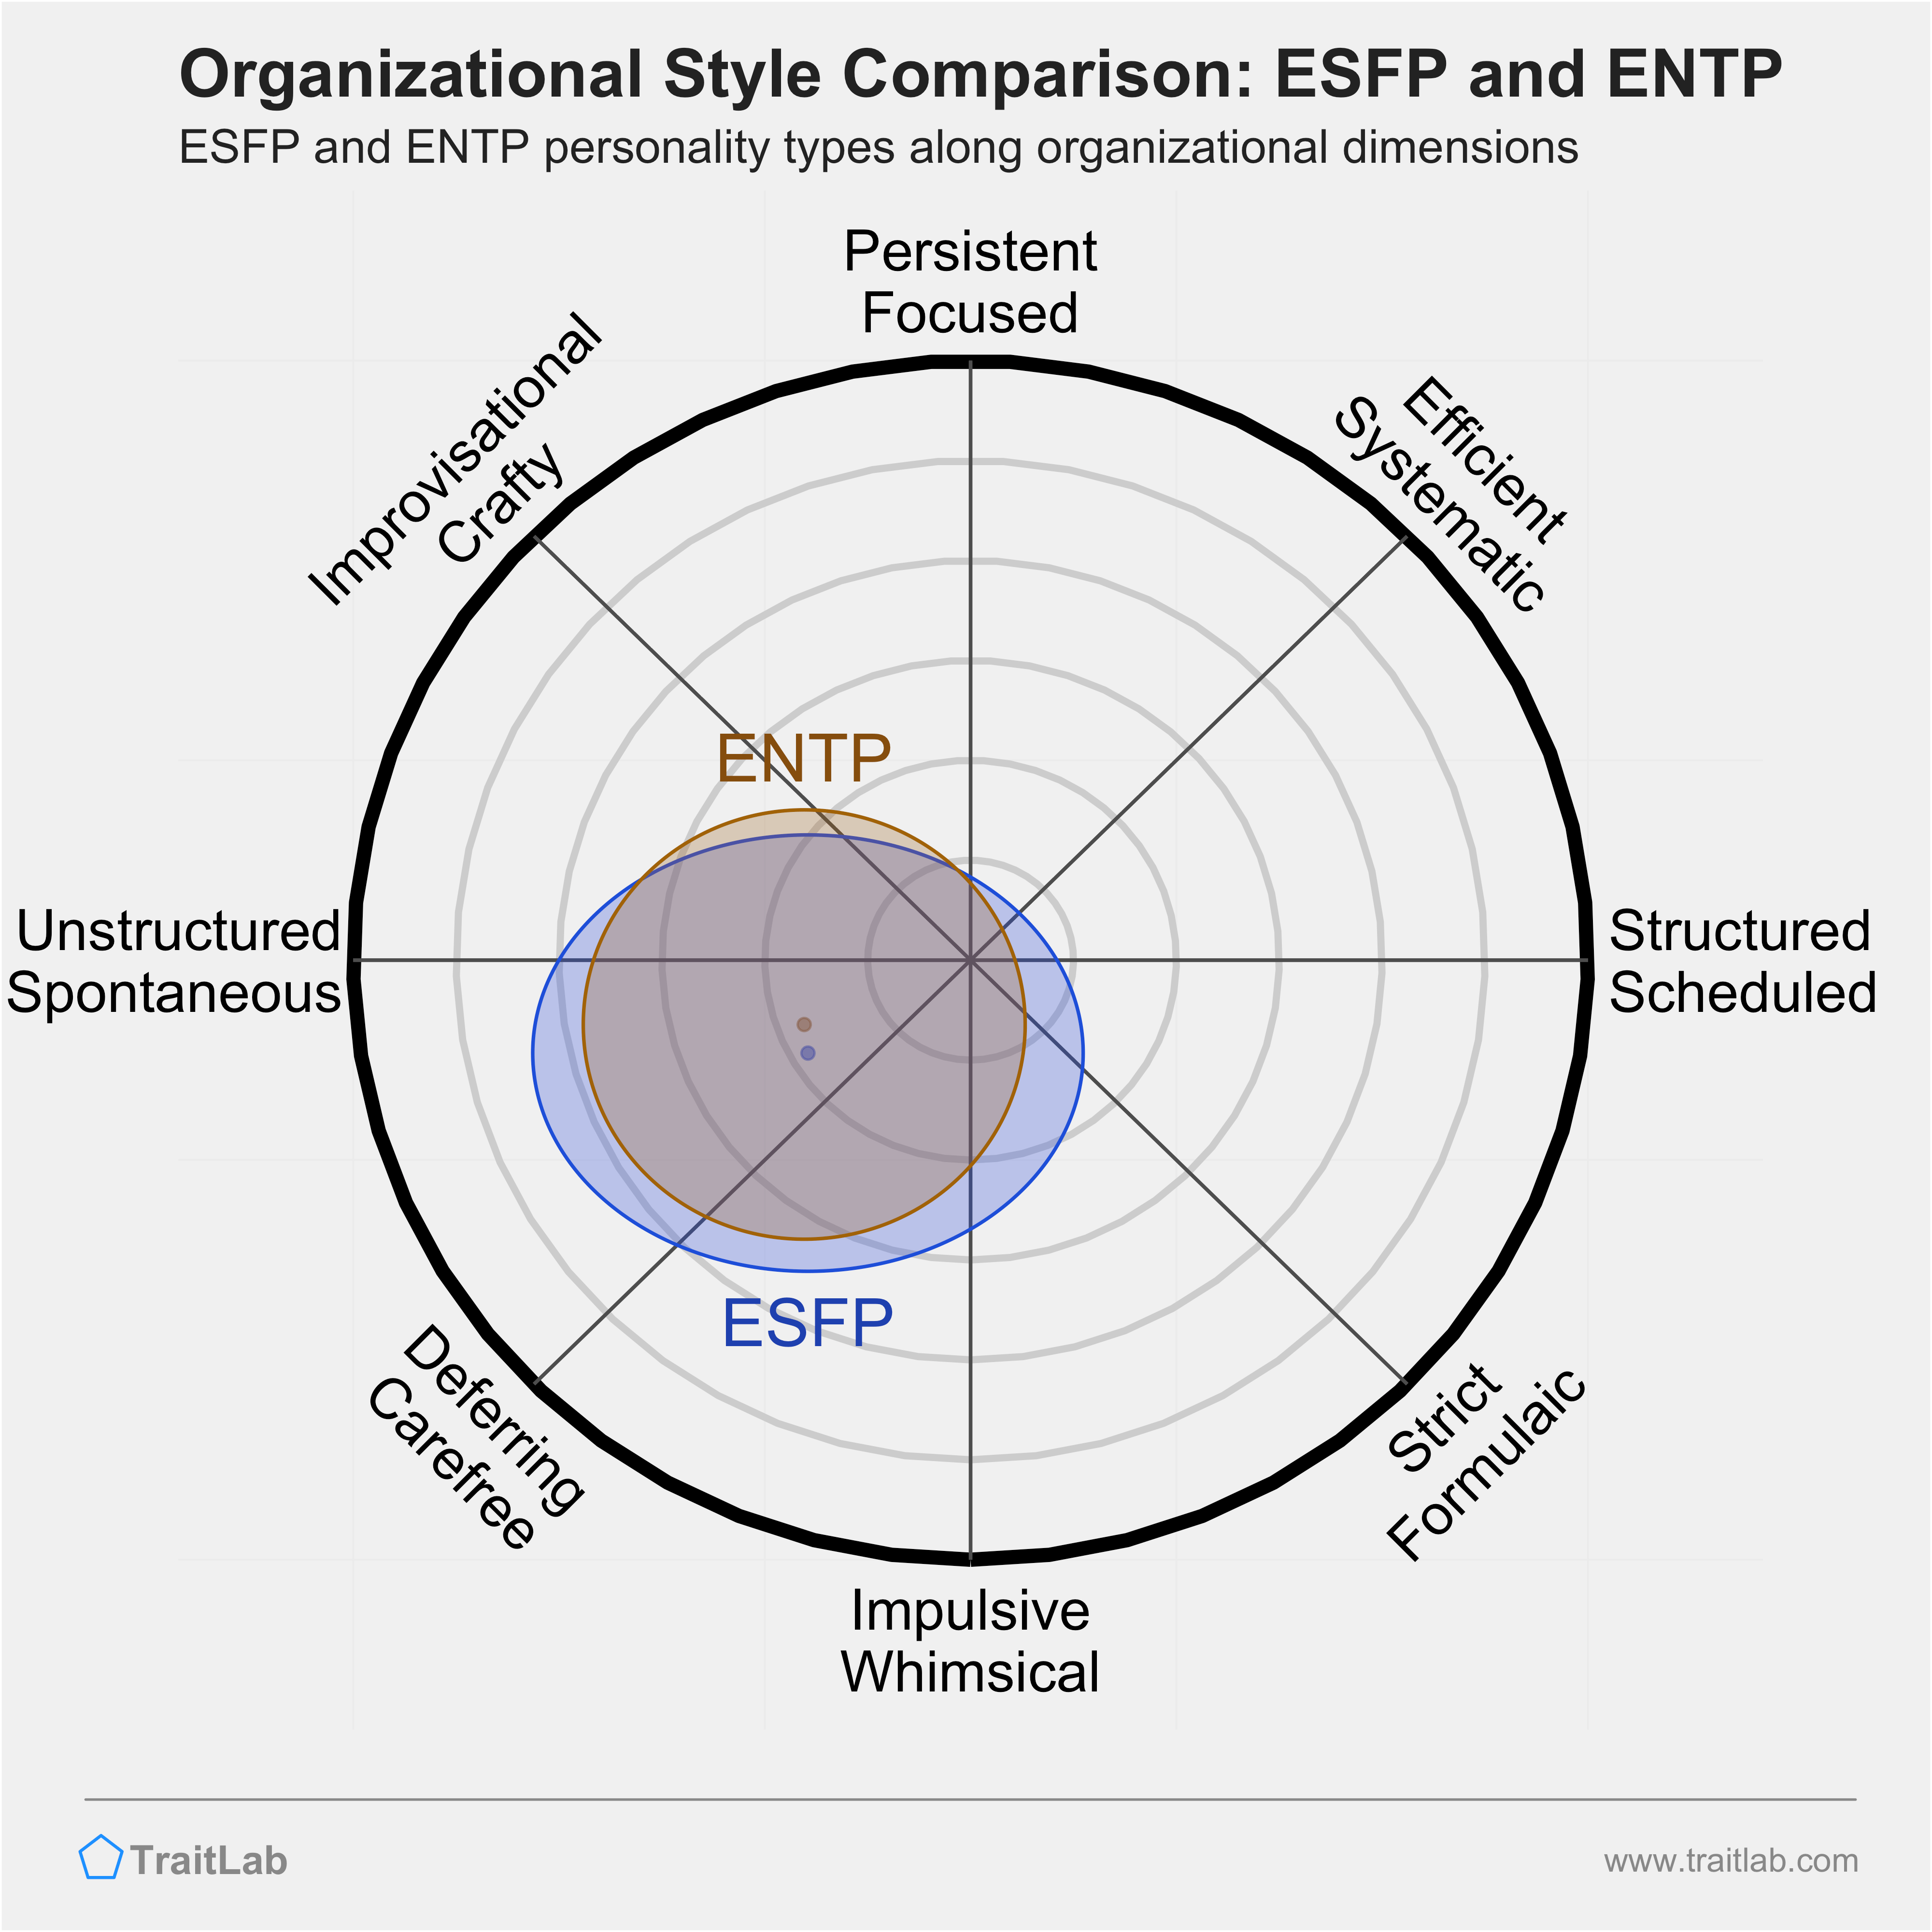 ESFP and ENTP comparison across organizational dimensions